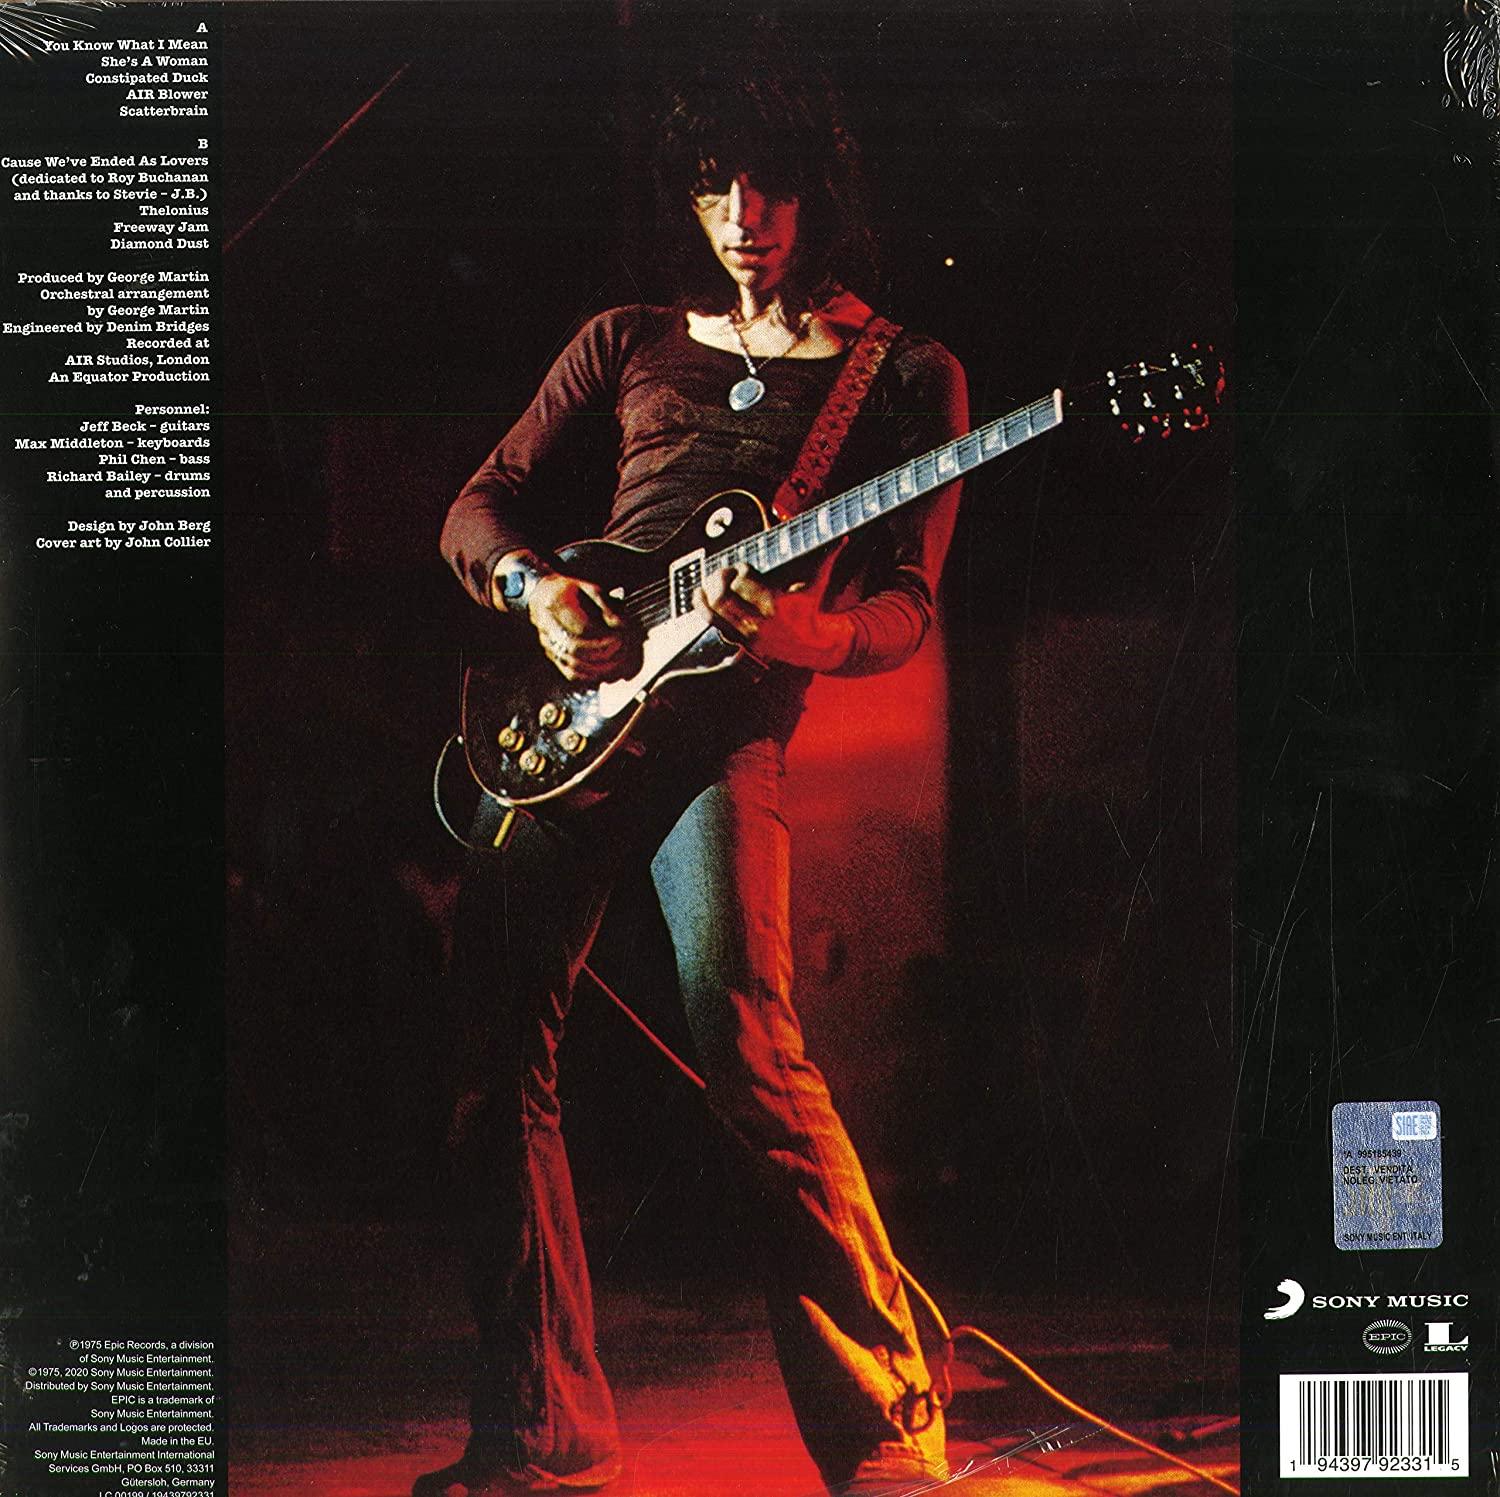 Jeff Beck - Blow By Blow (Limited Edition Import, Orange Vinyl) (LP) - Joco Records